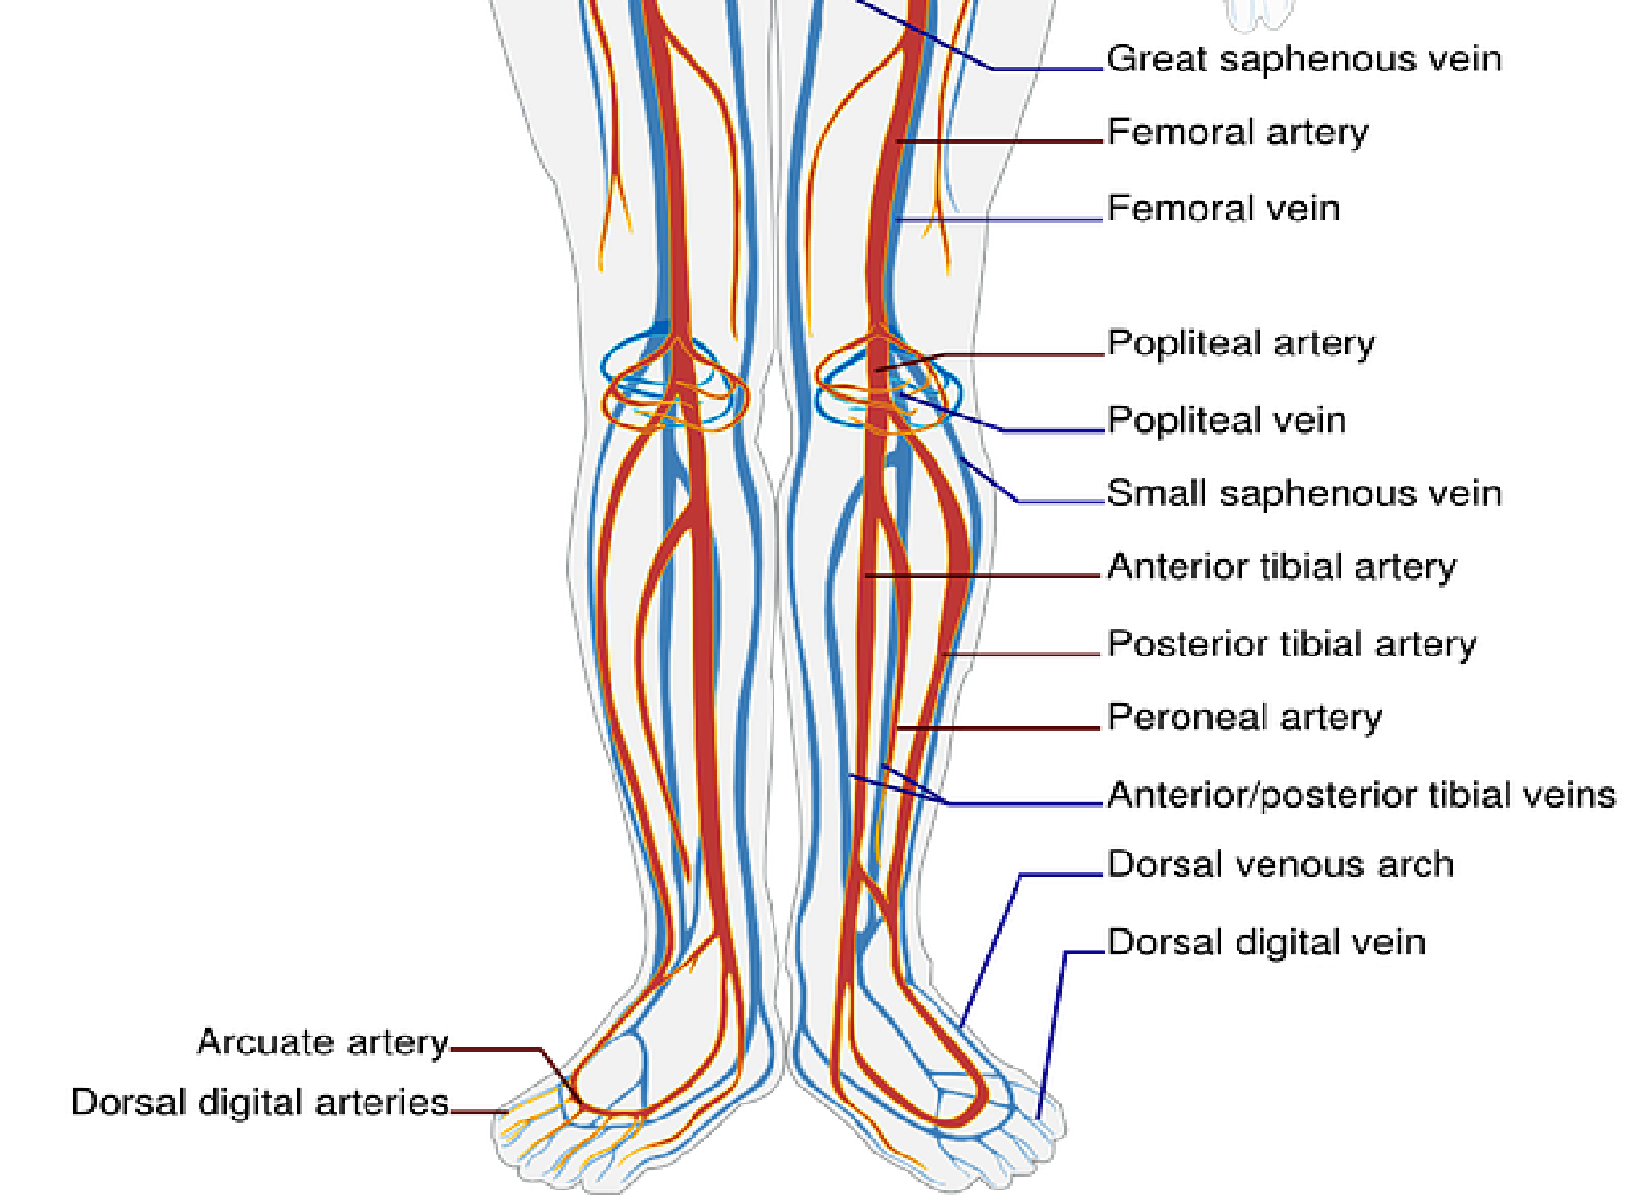 Vasculature of the lower limbs